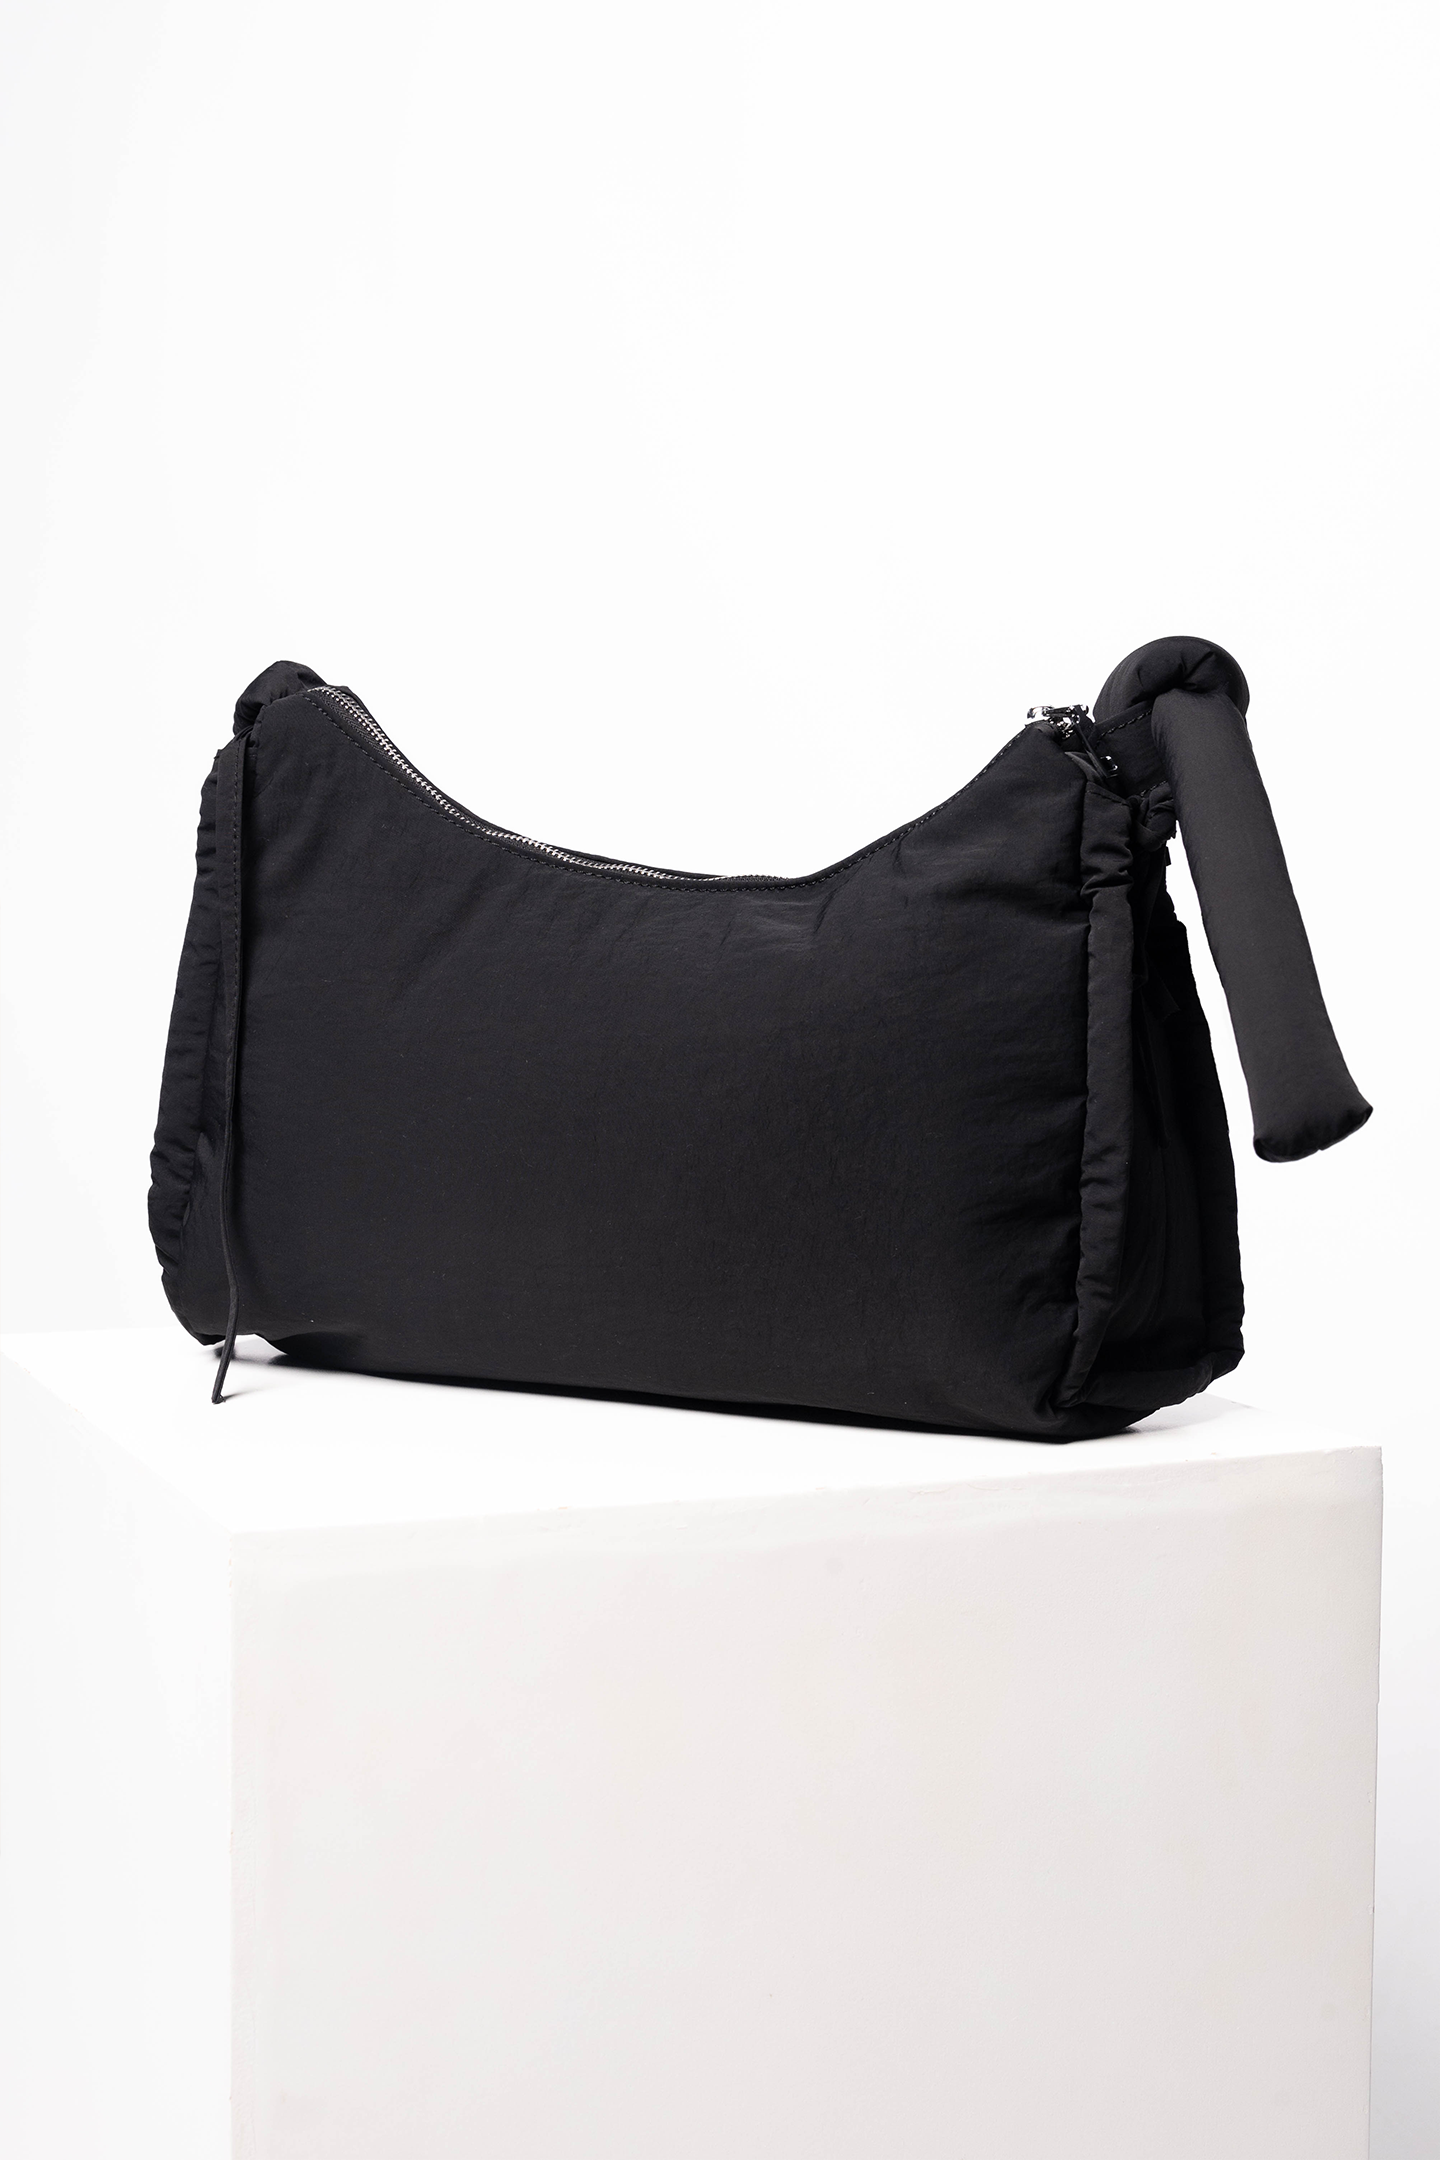 Crossbody Puff Bag in Black